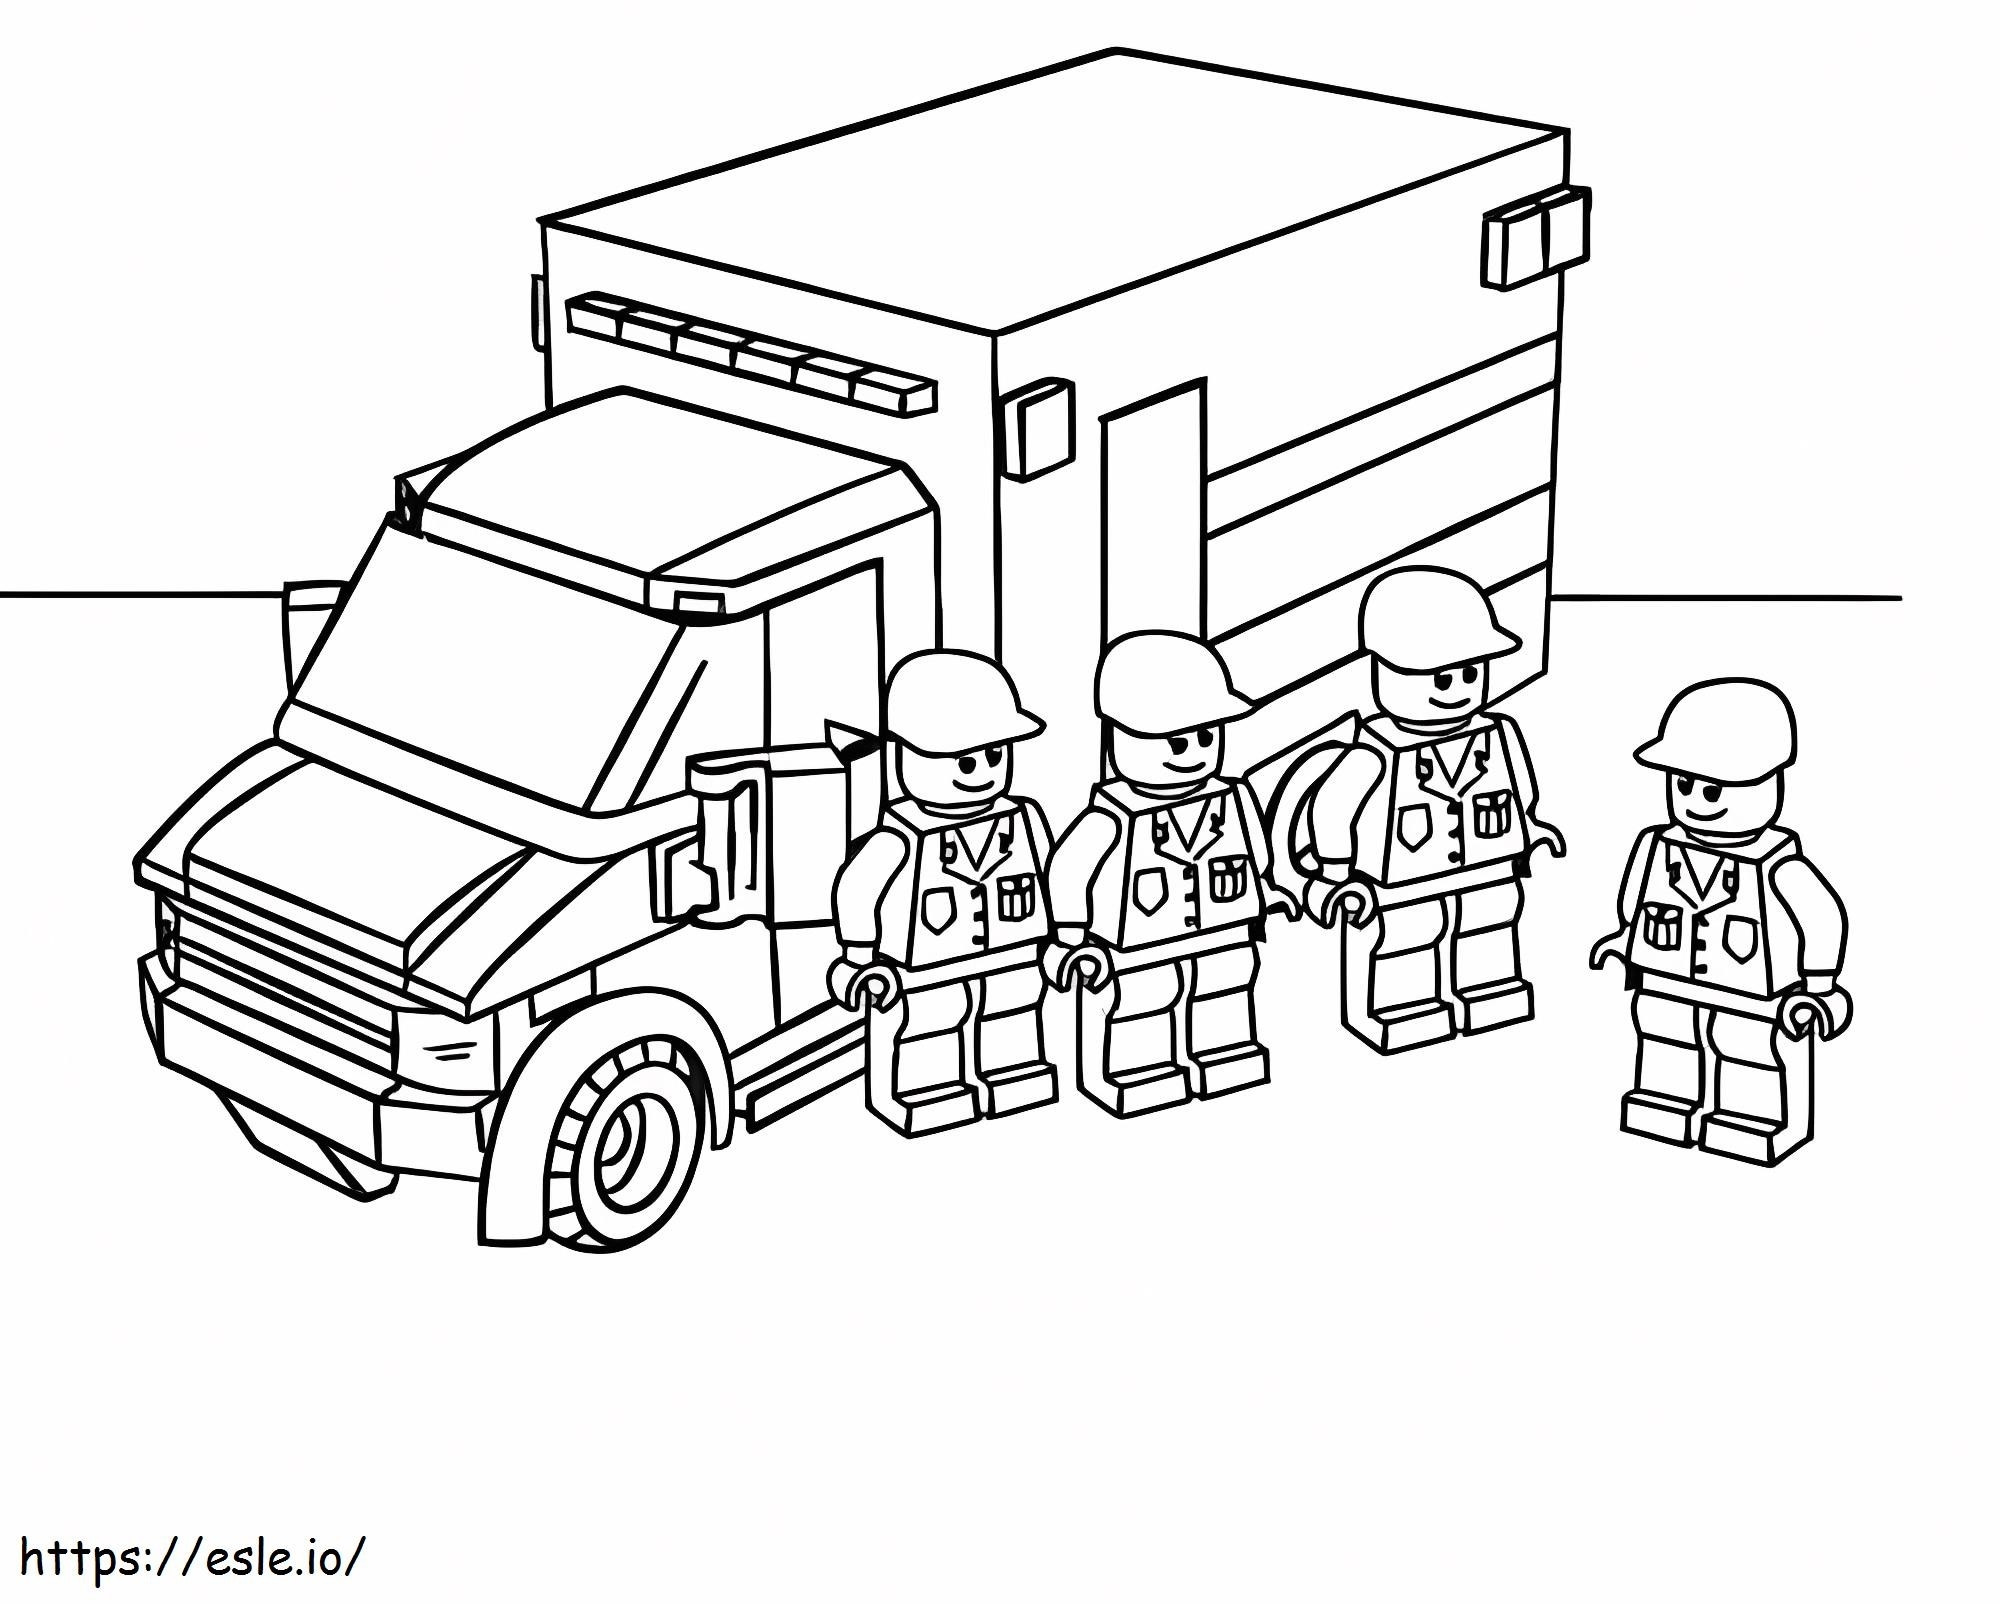 LEGO-ambulance kleurplaat kleurplaat